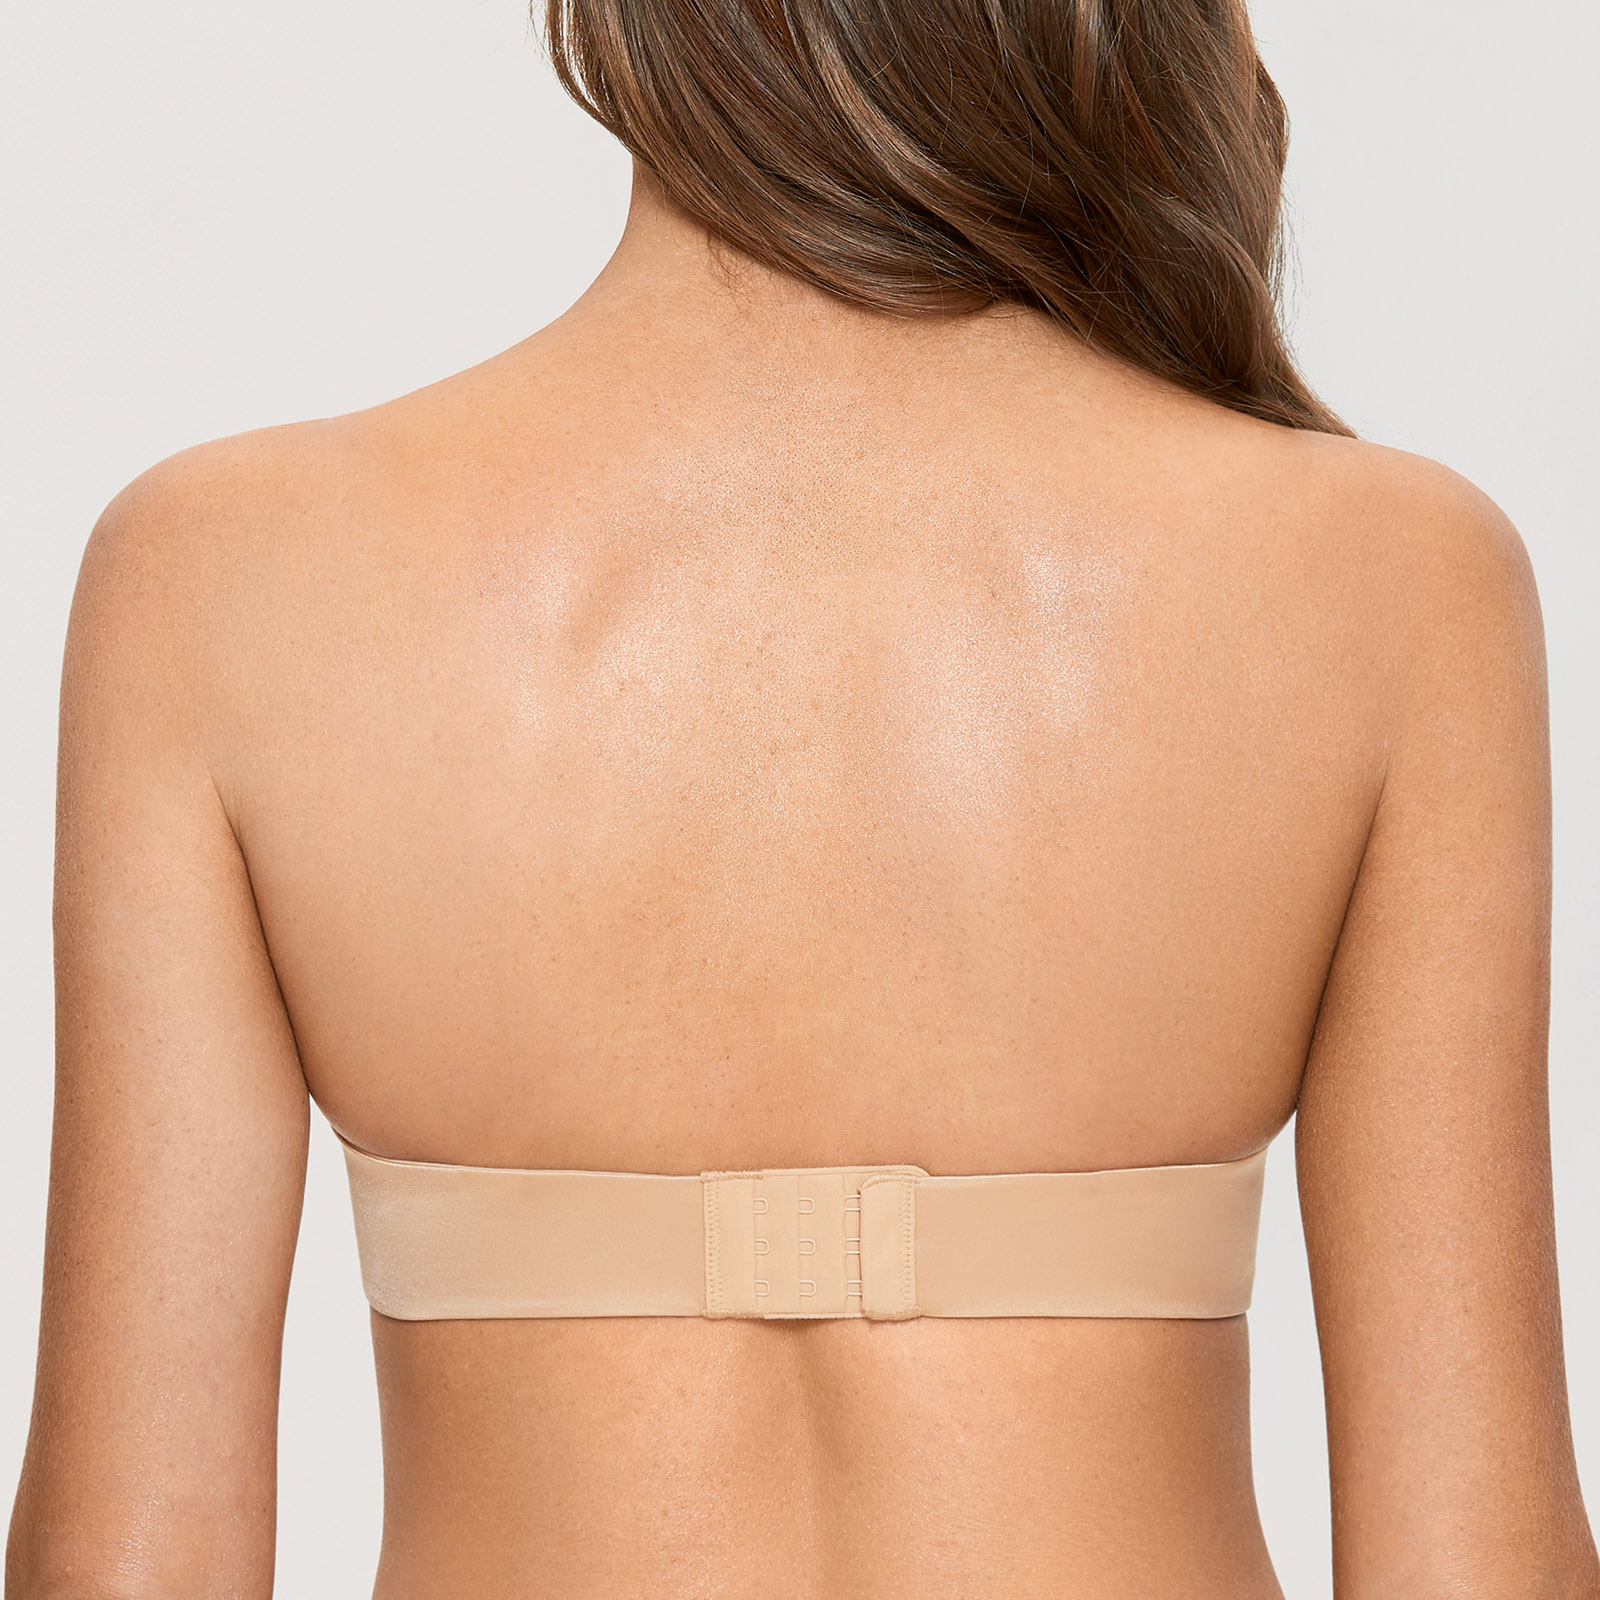 DOBREVA Women's Sticky Bra Strapless Backless Push Up Adhesive